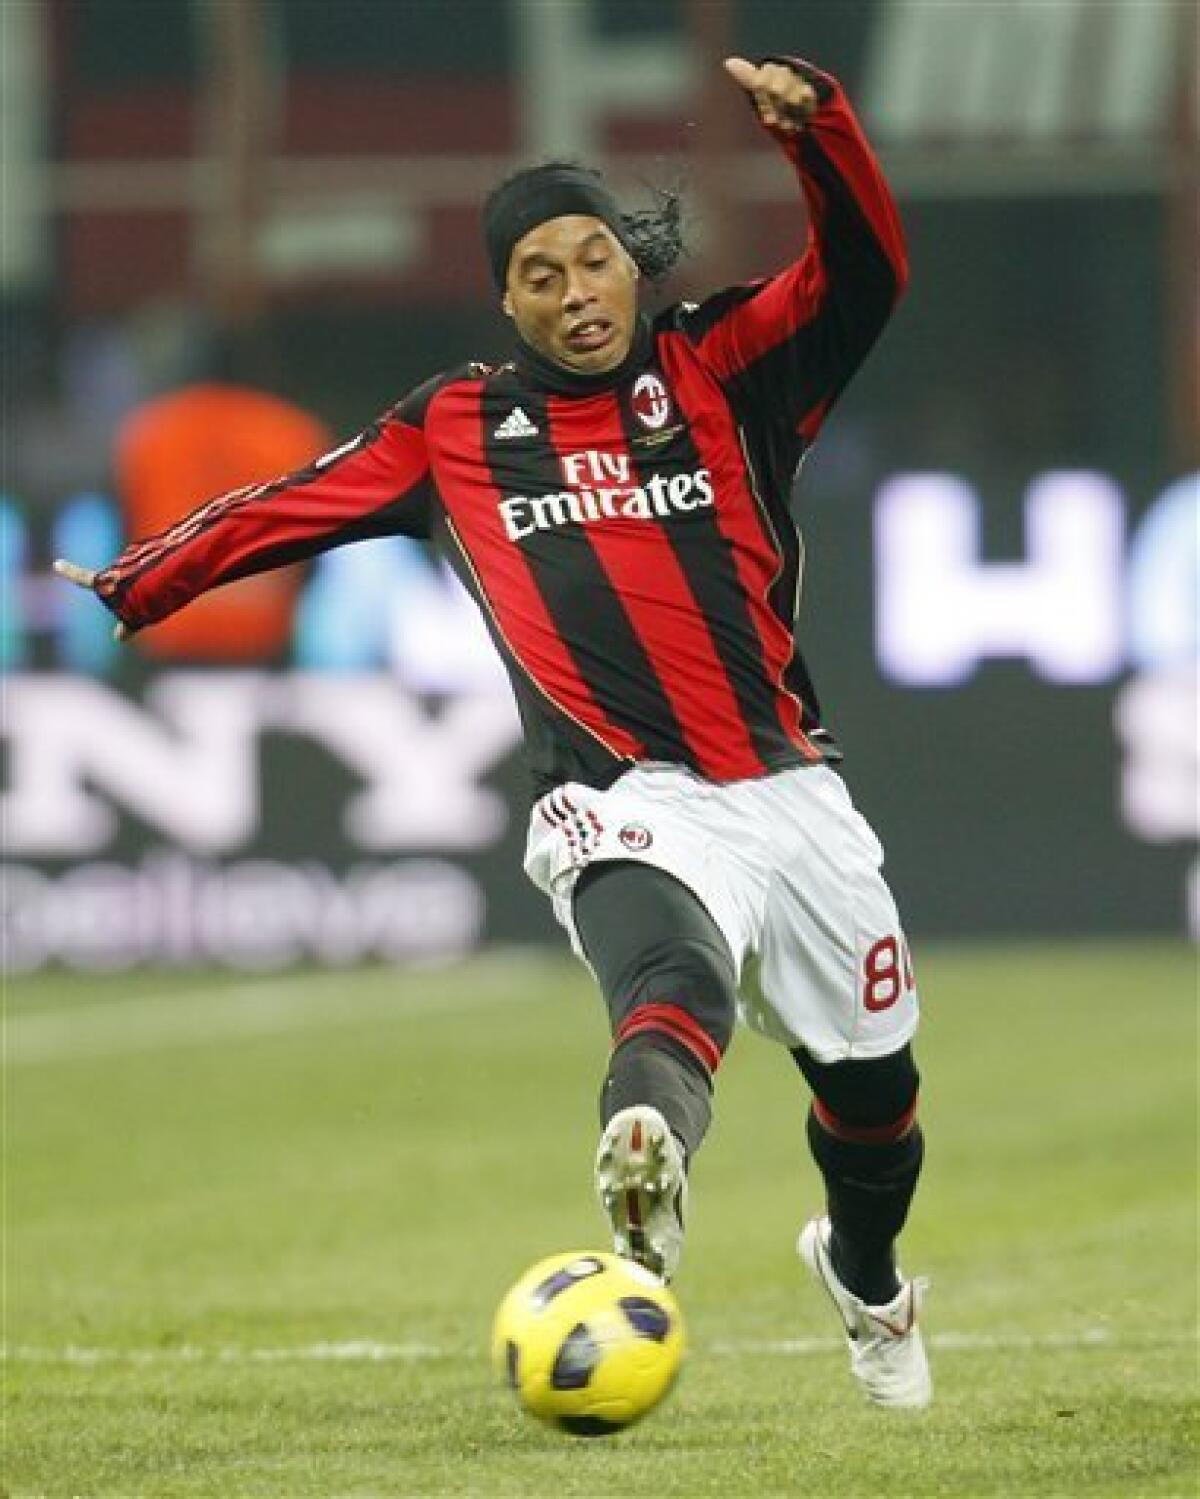 AC Milan - AC Milan added a new photo.